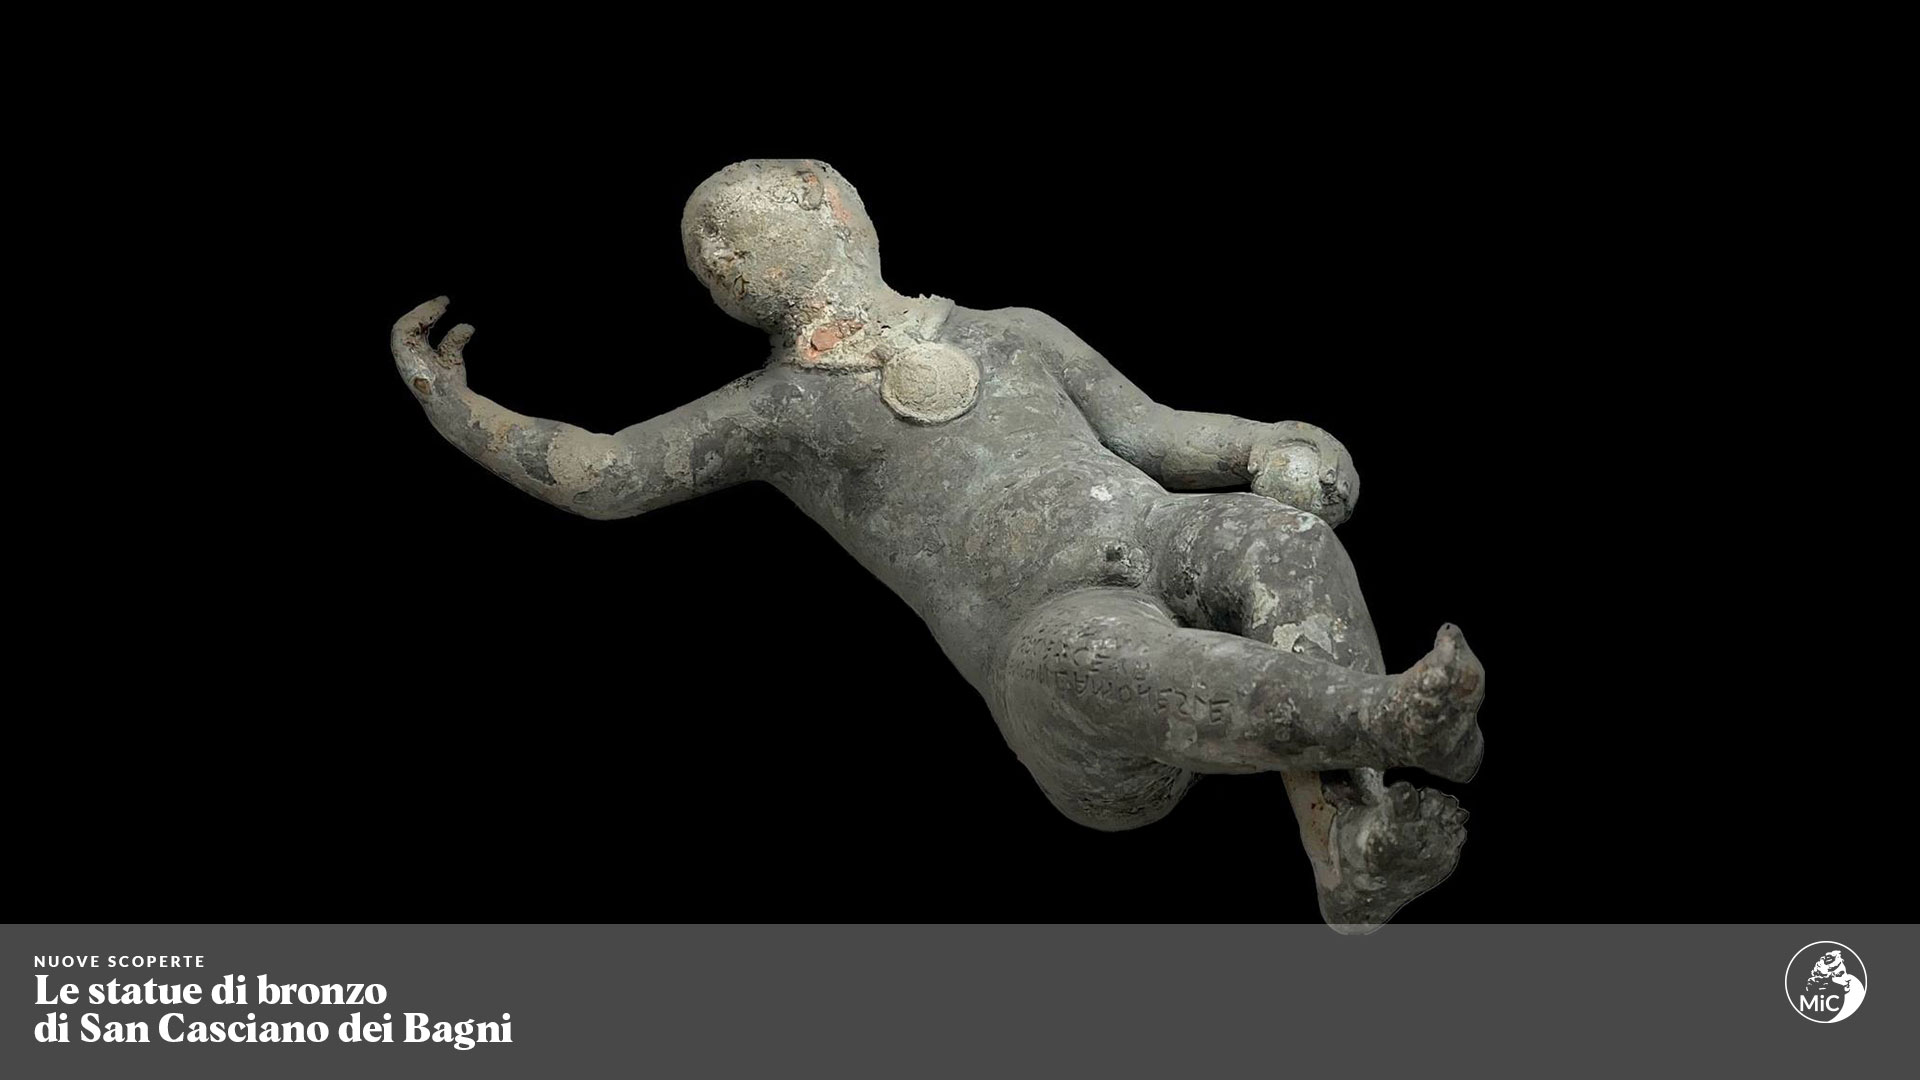 Ancient Roman bronze sculpture. Credit : Minister della Cultura / public domain